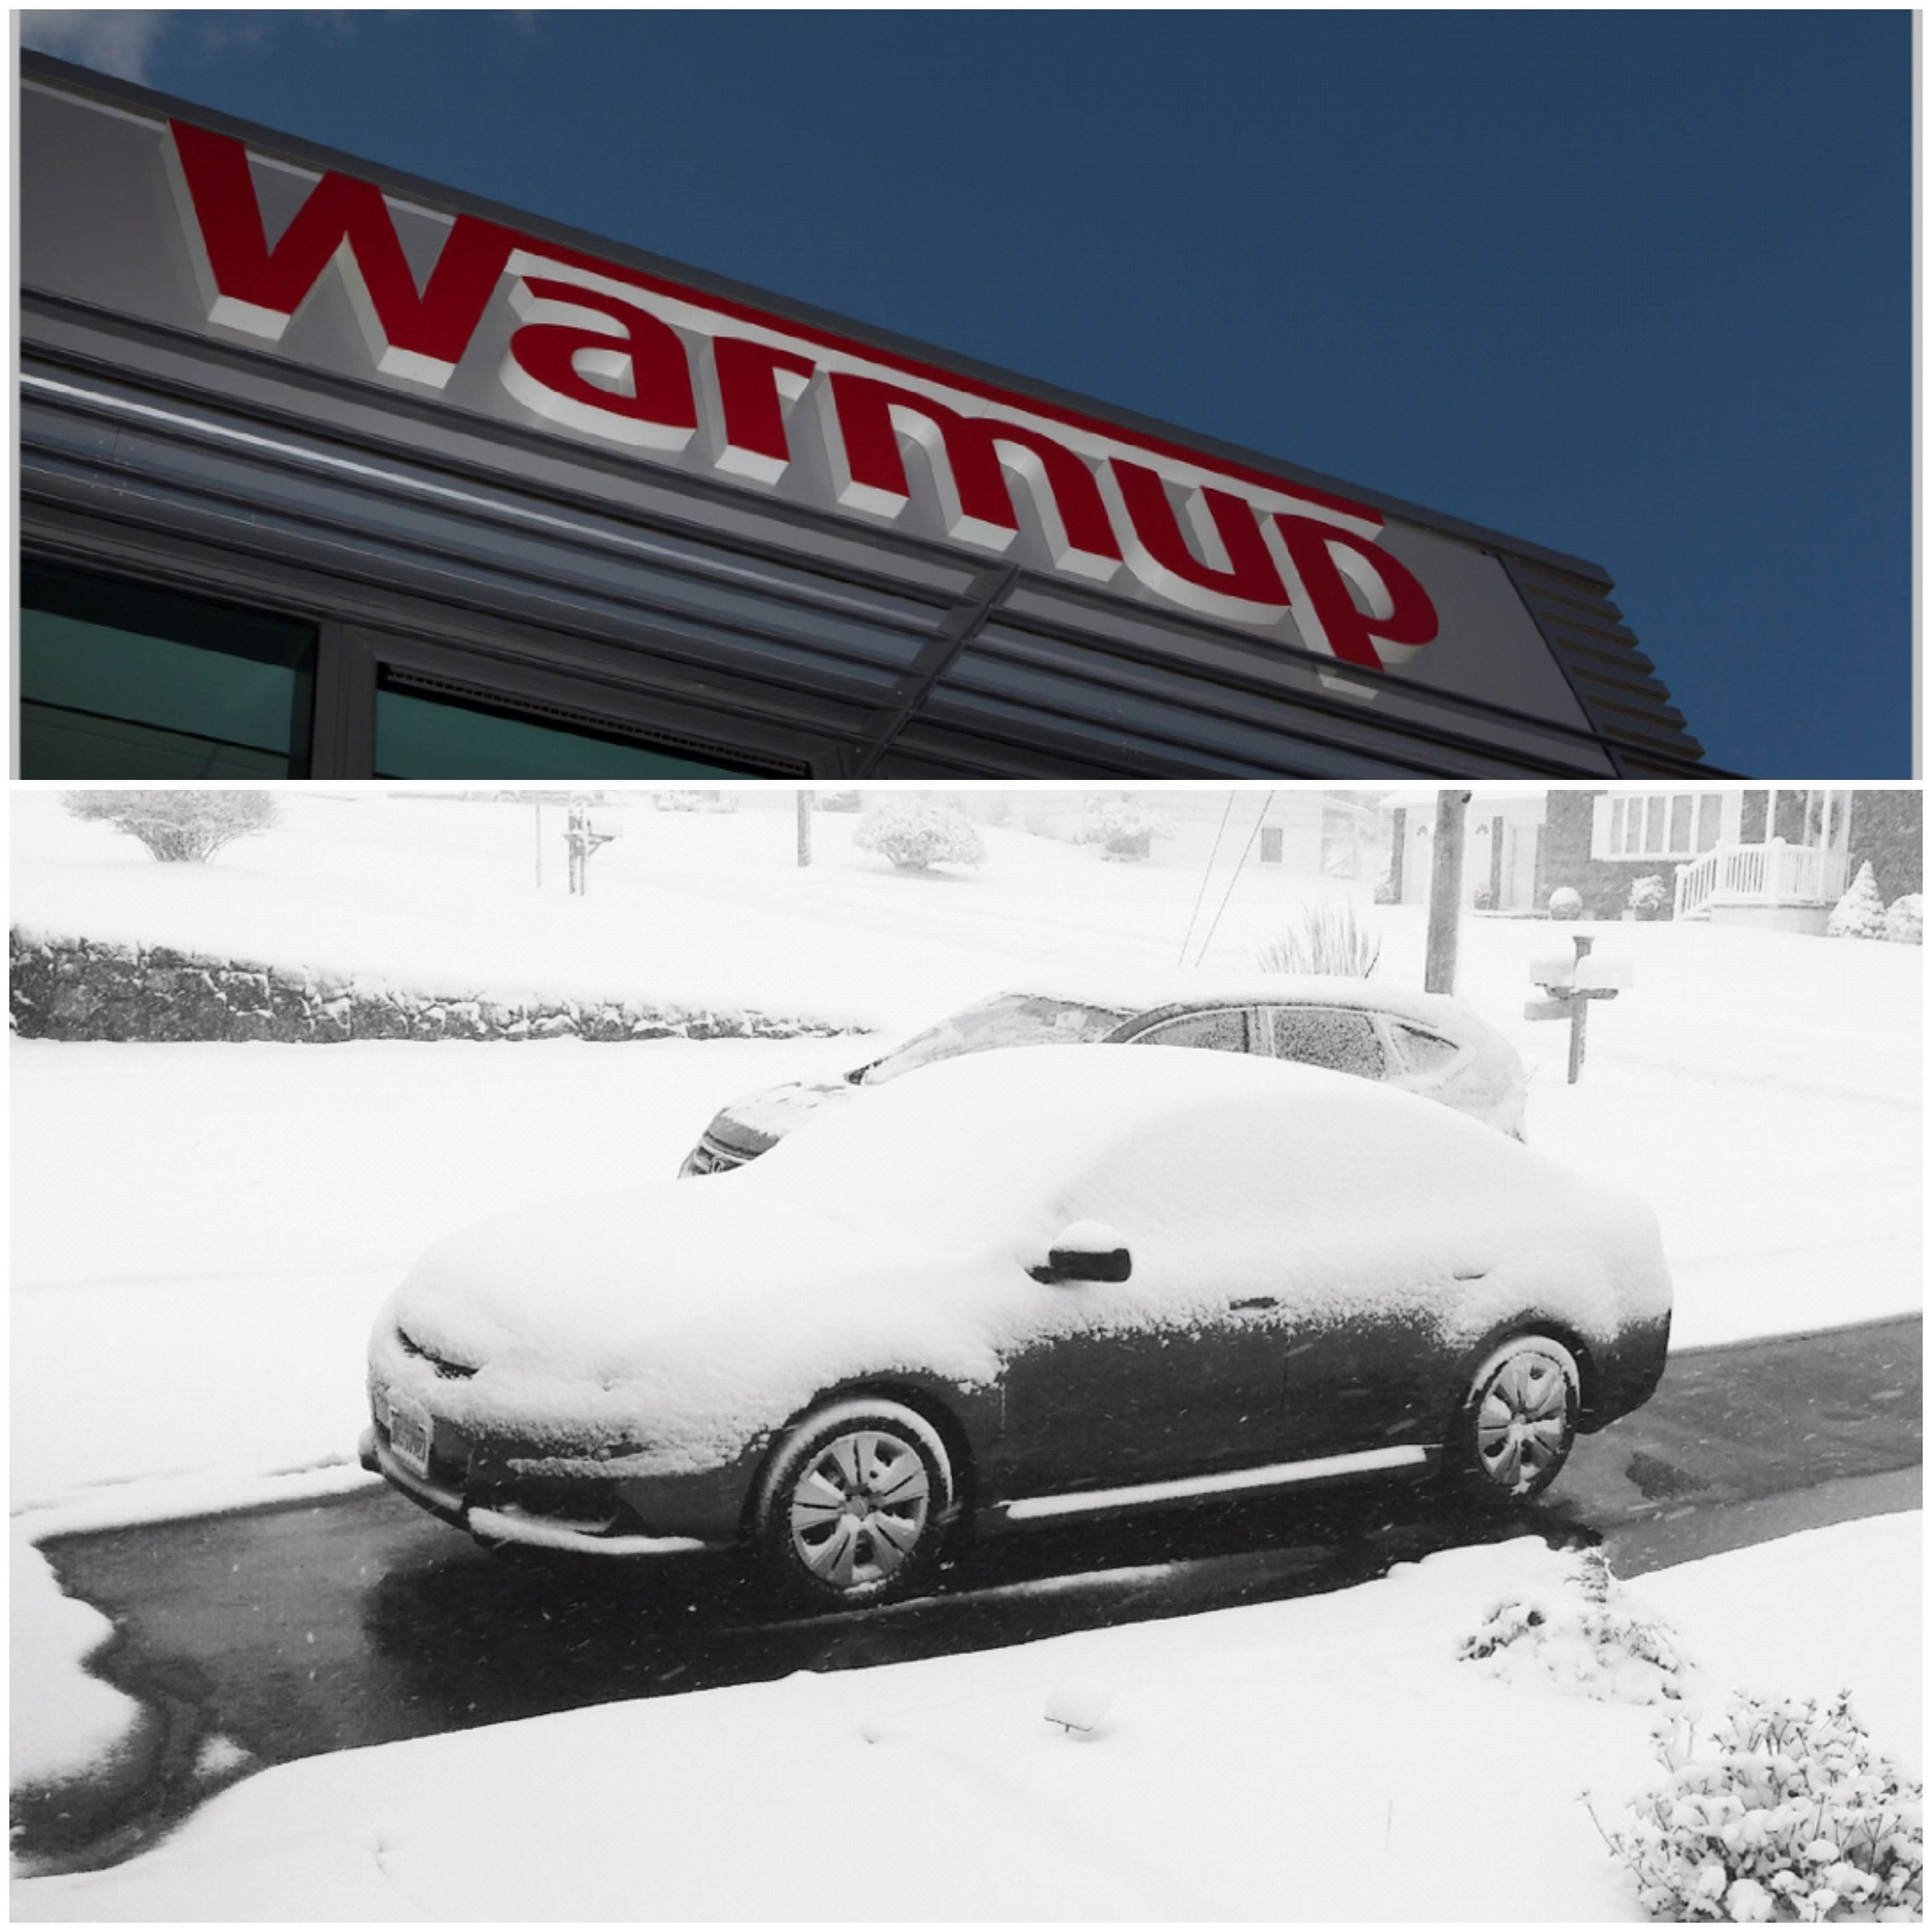 warmup heated driveway with logo